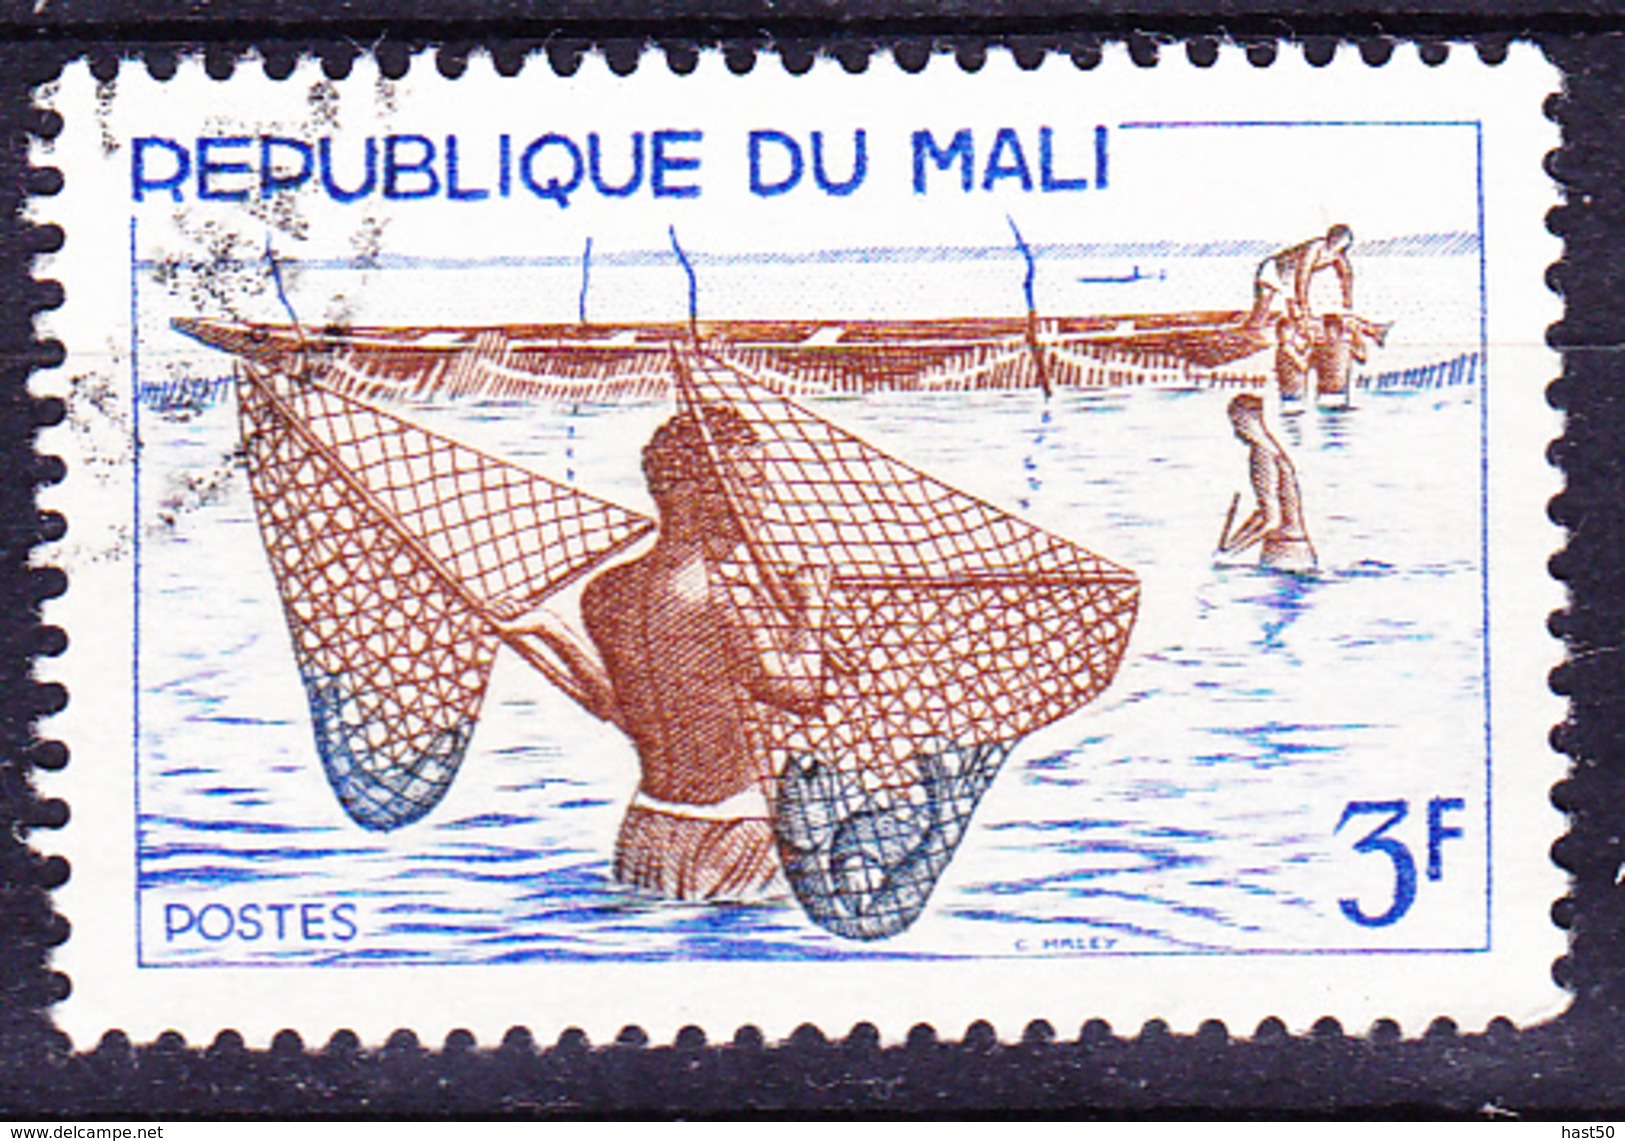 Mali - Fischer Am Fluss/Fishermen On River/Pêche Sur La Rivière (MiNr: 126) 1966 - Gest Used Obl - Mali (1959-...)